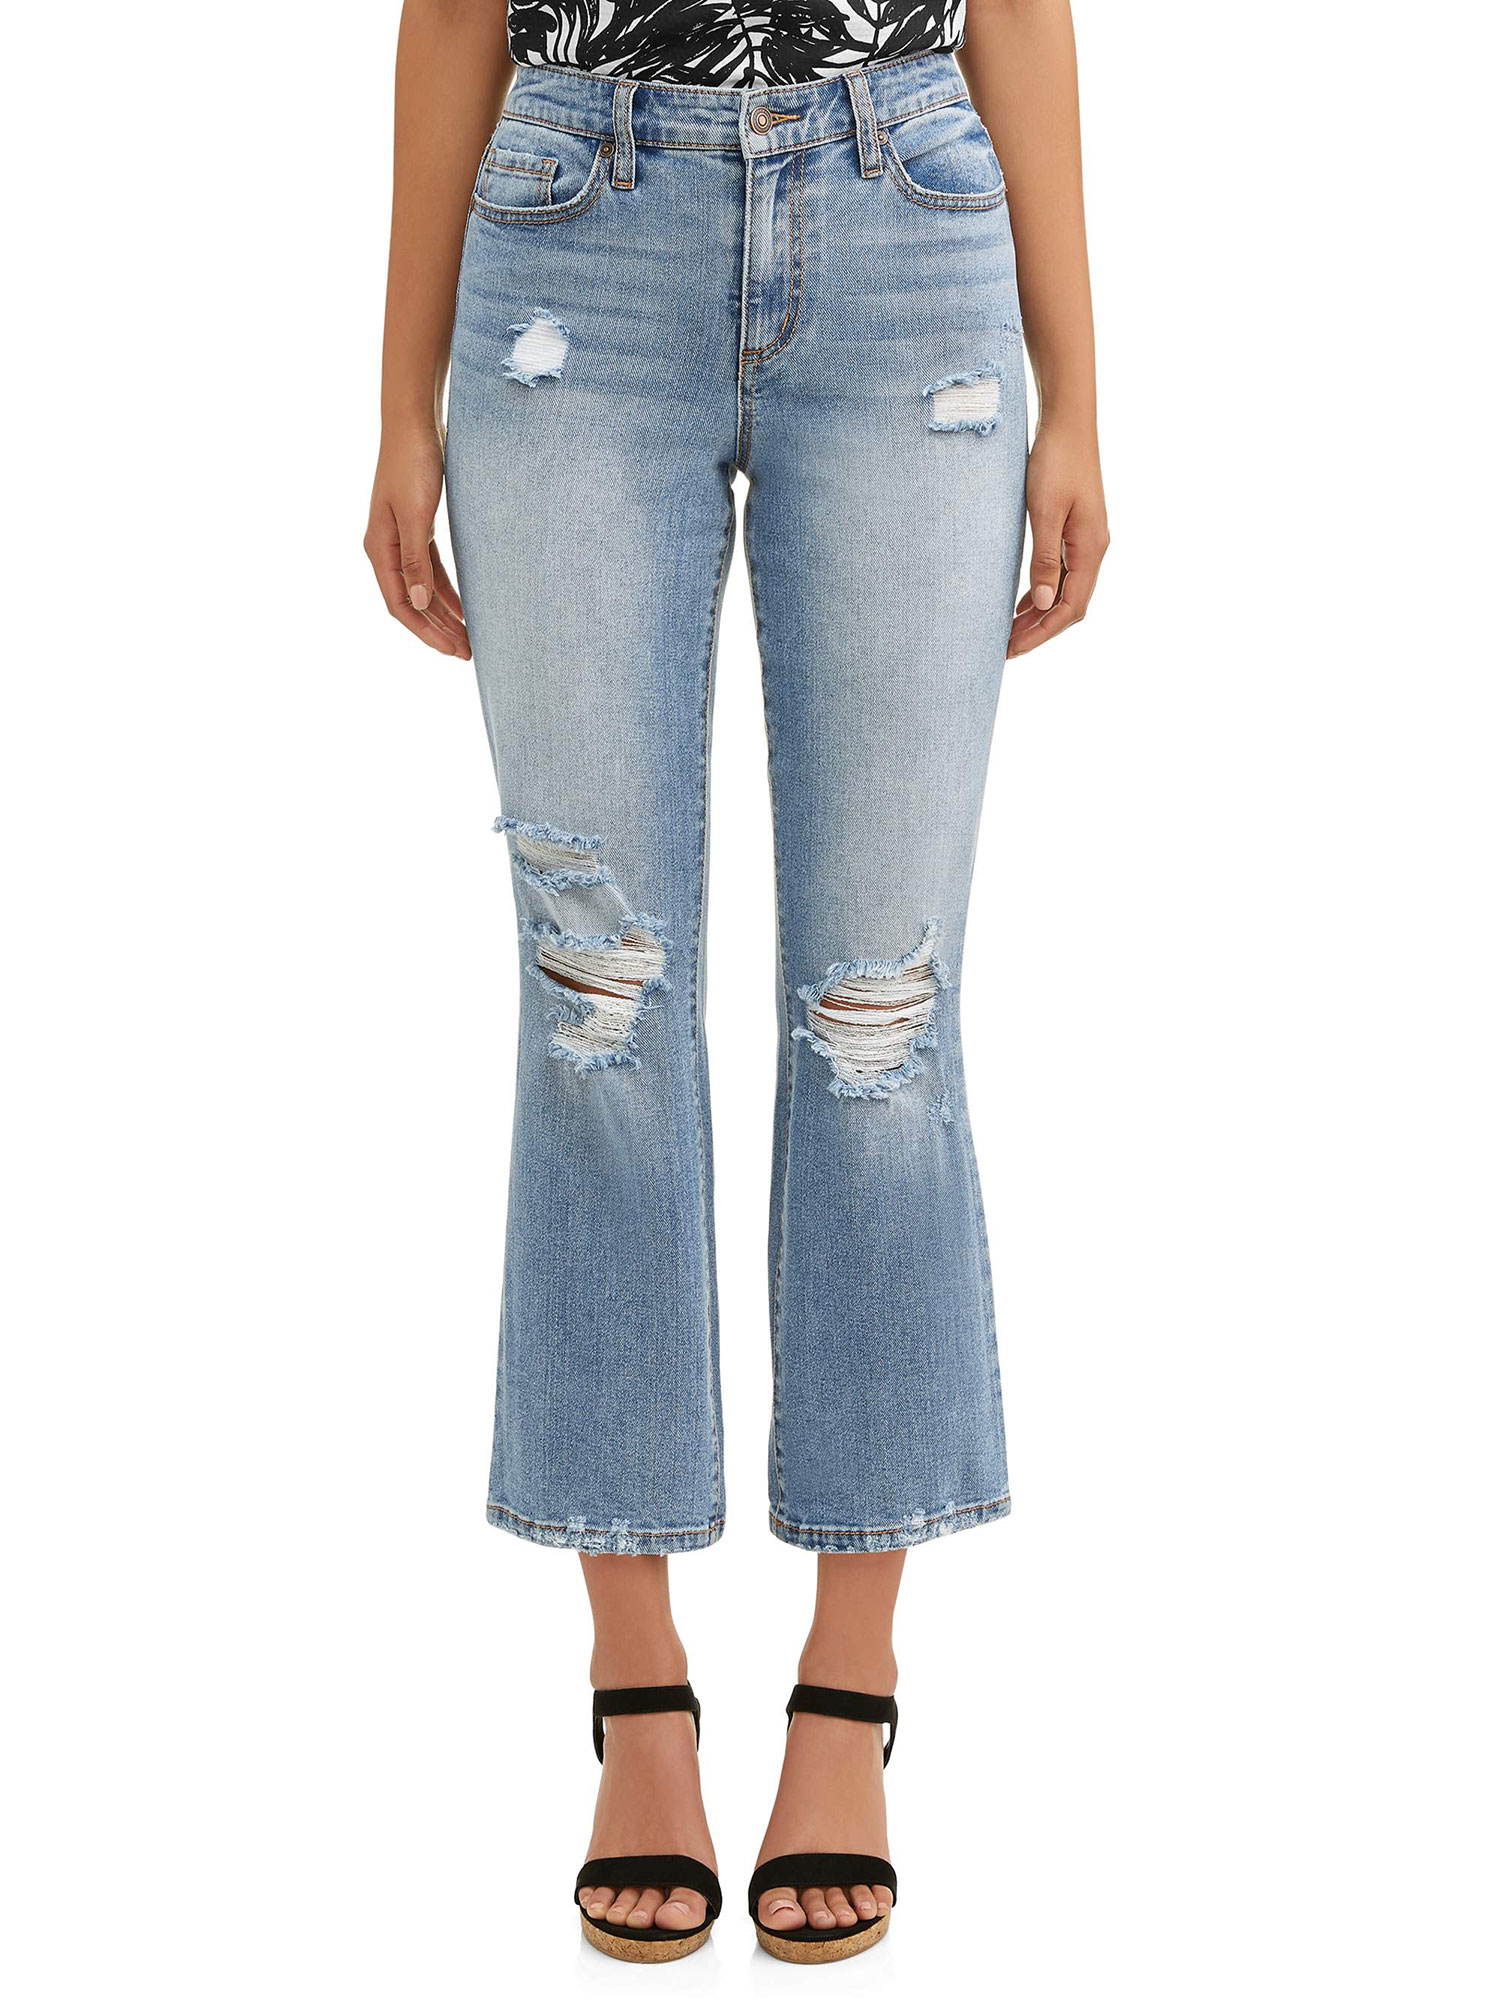 Sofia Jeans by Sofia Vergara Walmart Spring Collection: Details